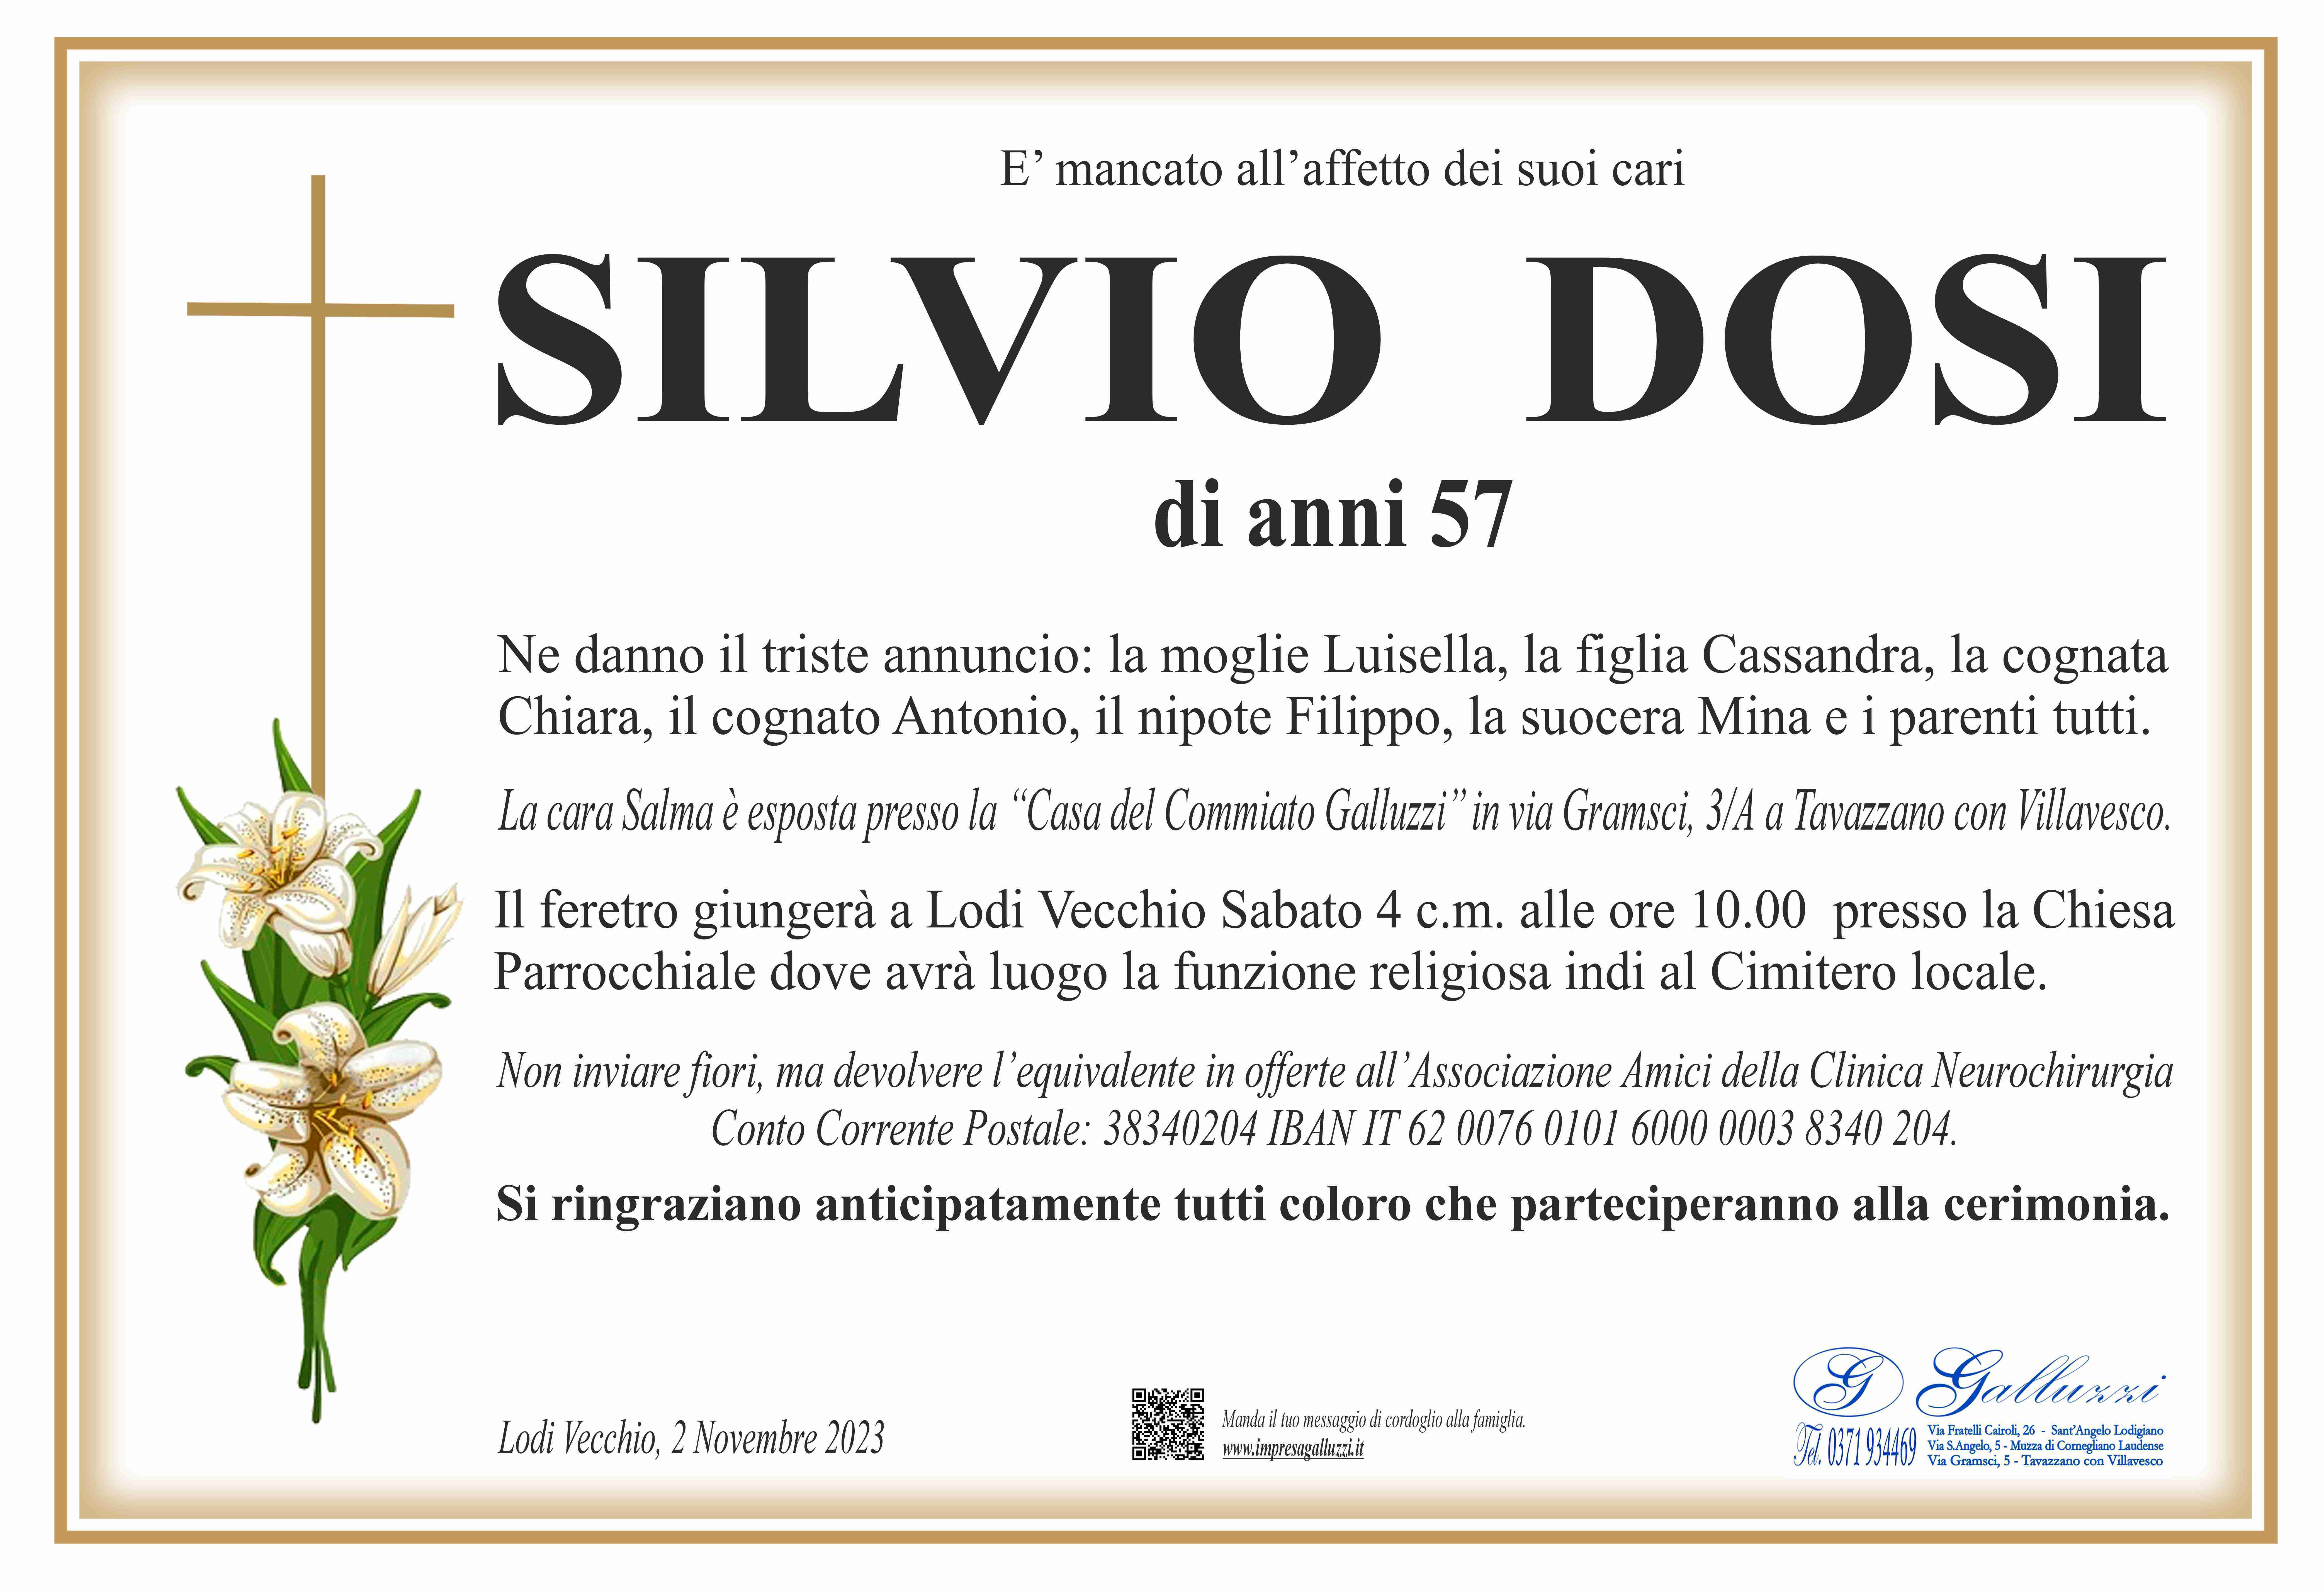 Silvio Dosi